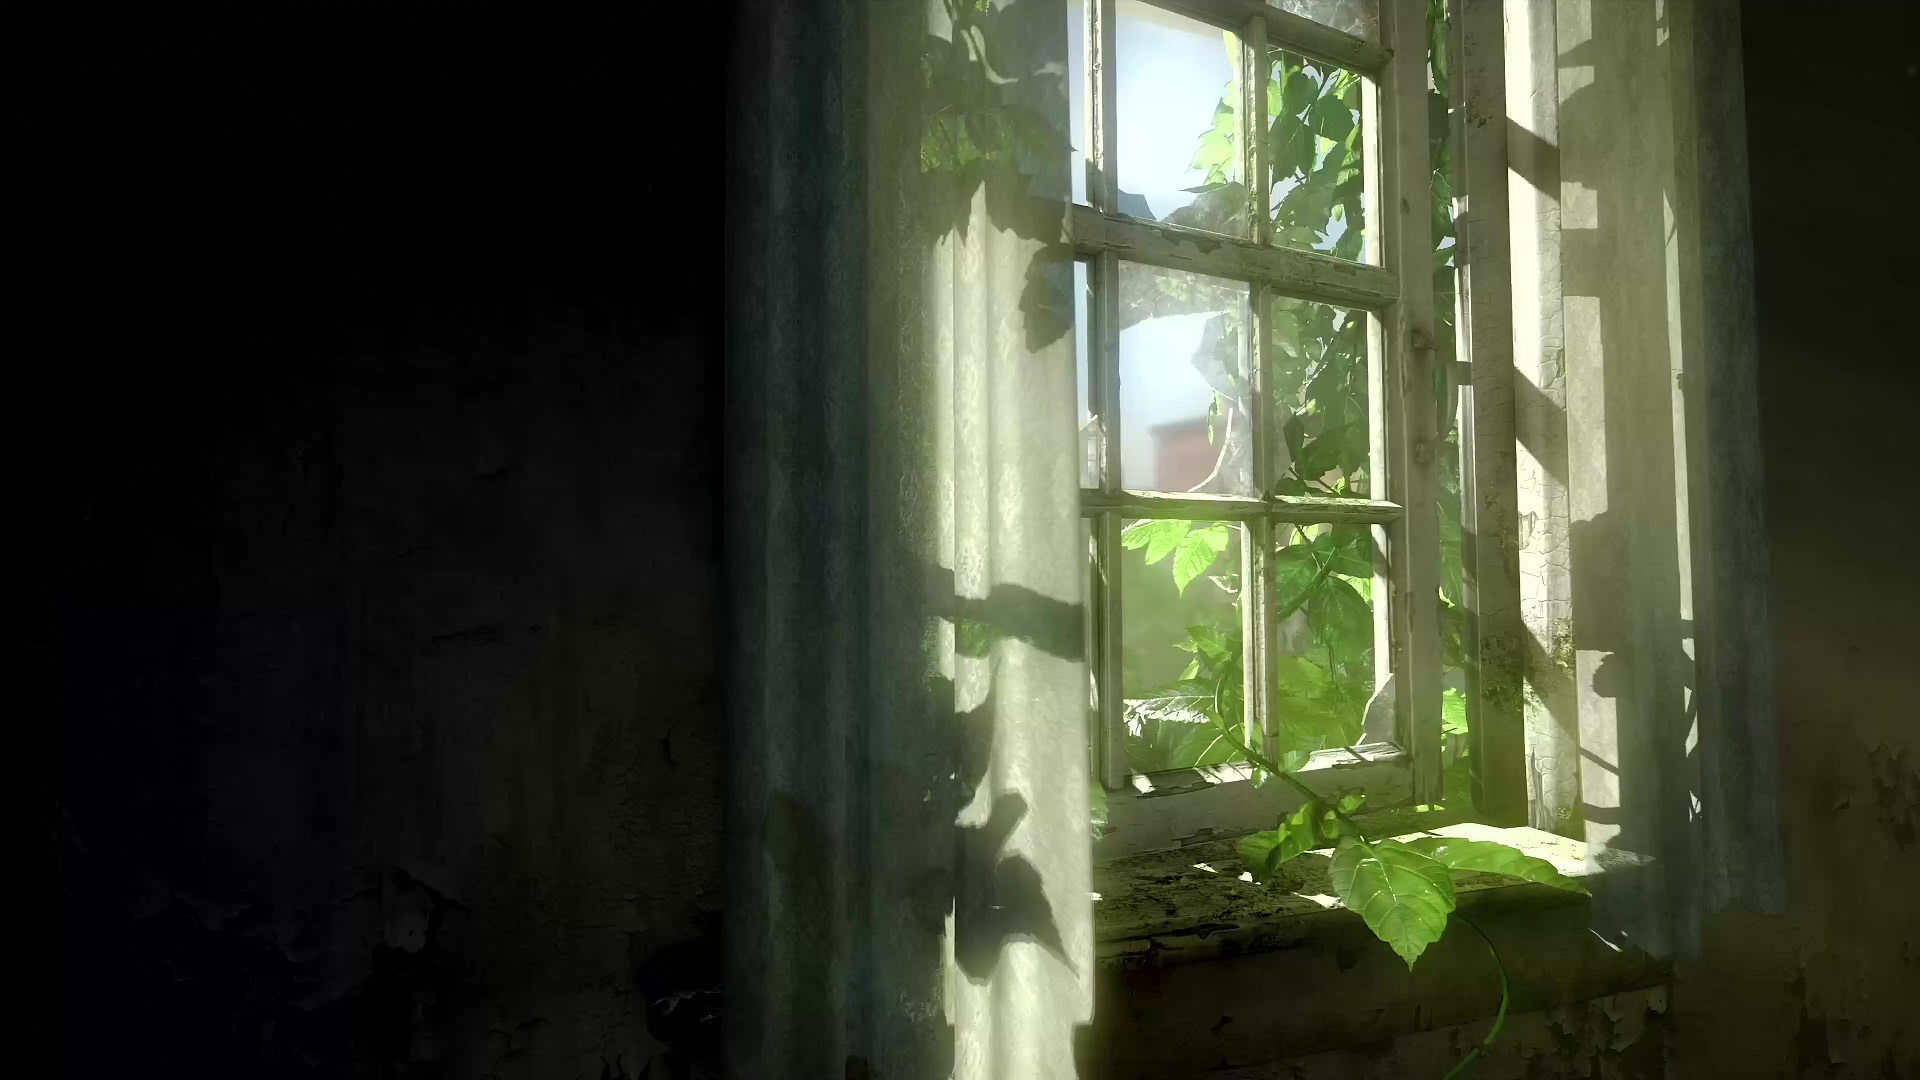 Wallpaper Engine] The Last of Us - TLoU - Ellie 